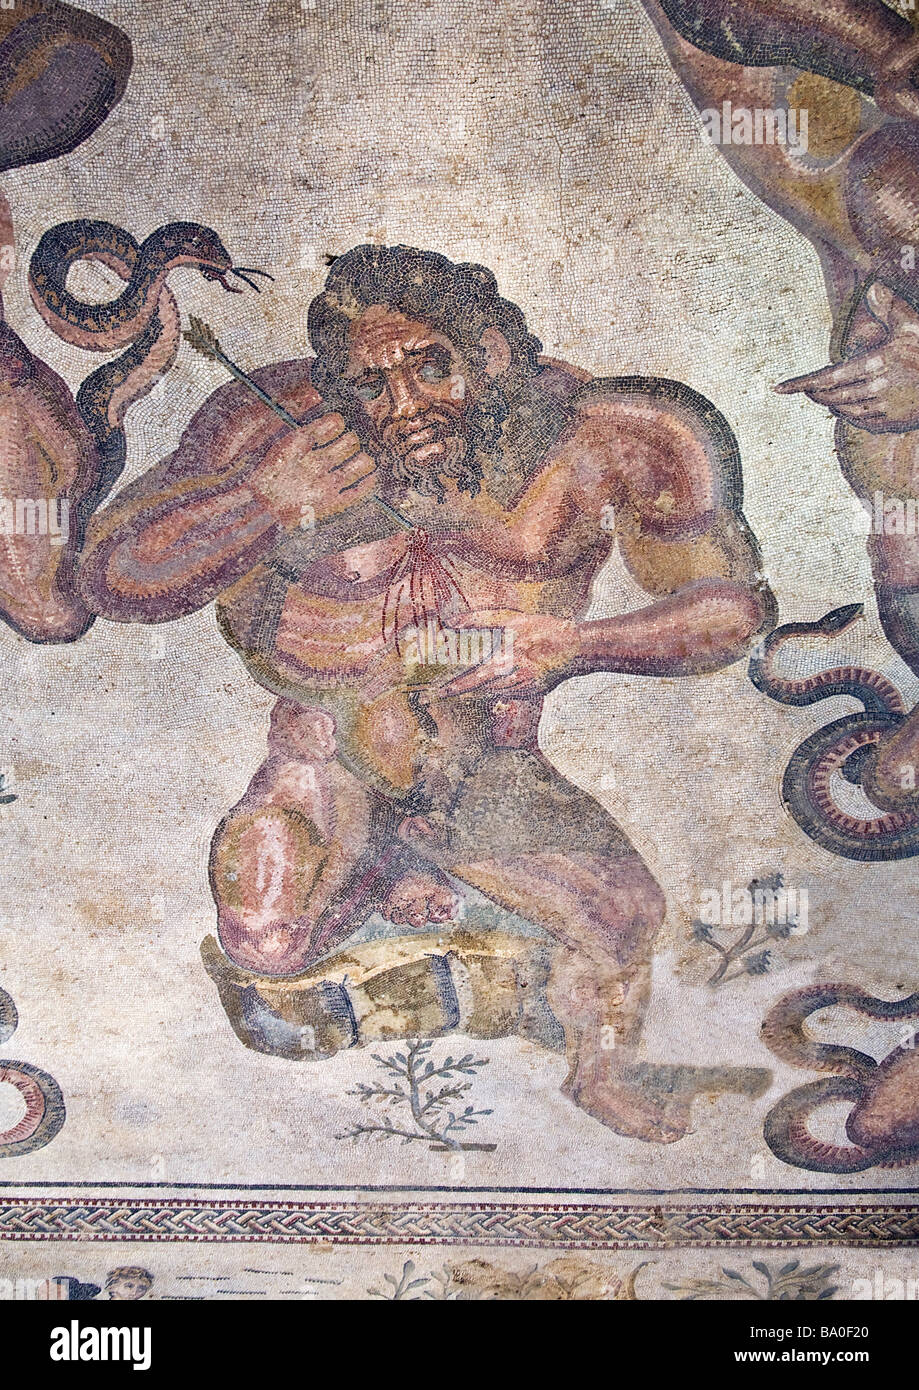 Battle of giants roman mosaic cental apse Villa Romana del Casale Piazza Armerina Sicily Italy Stock Photo